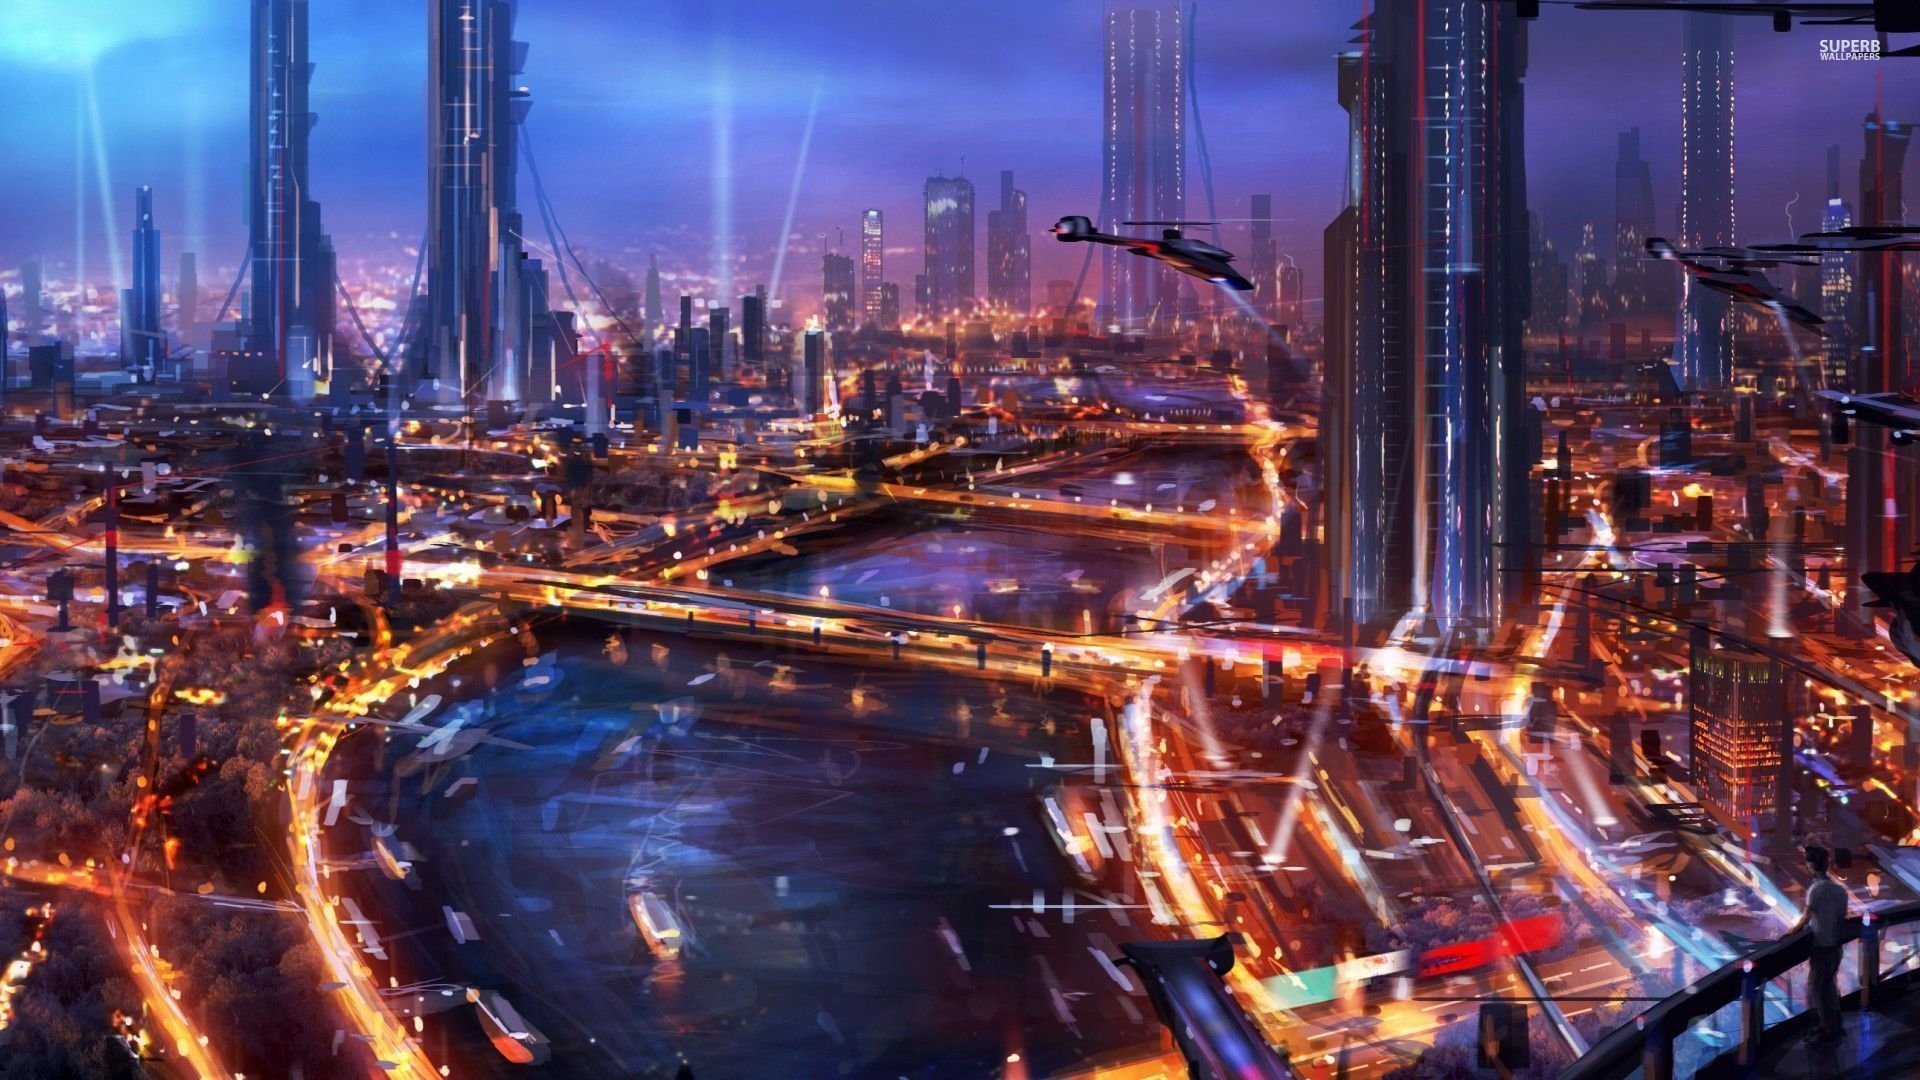 Download Sci Fi City Sci Fi City  HD Wallpaper